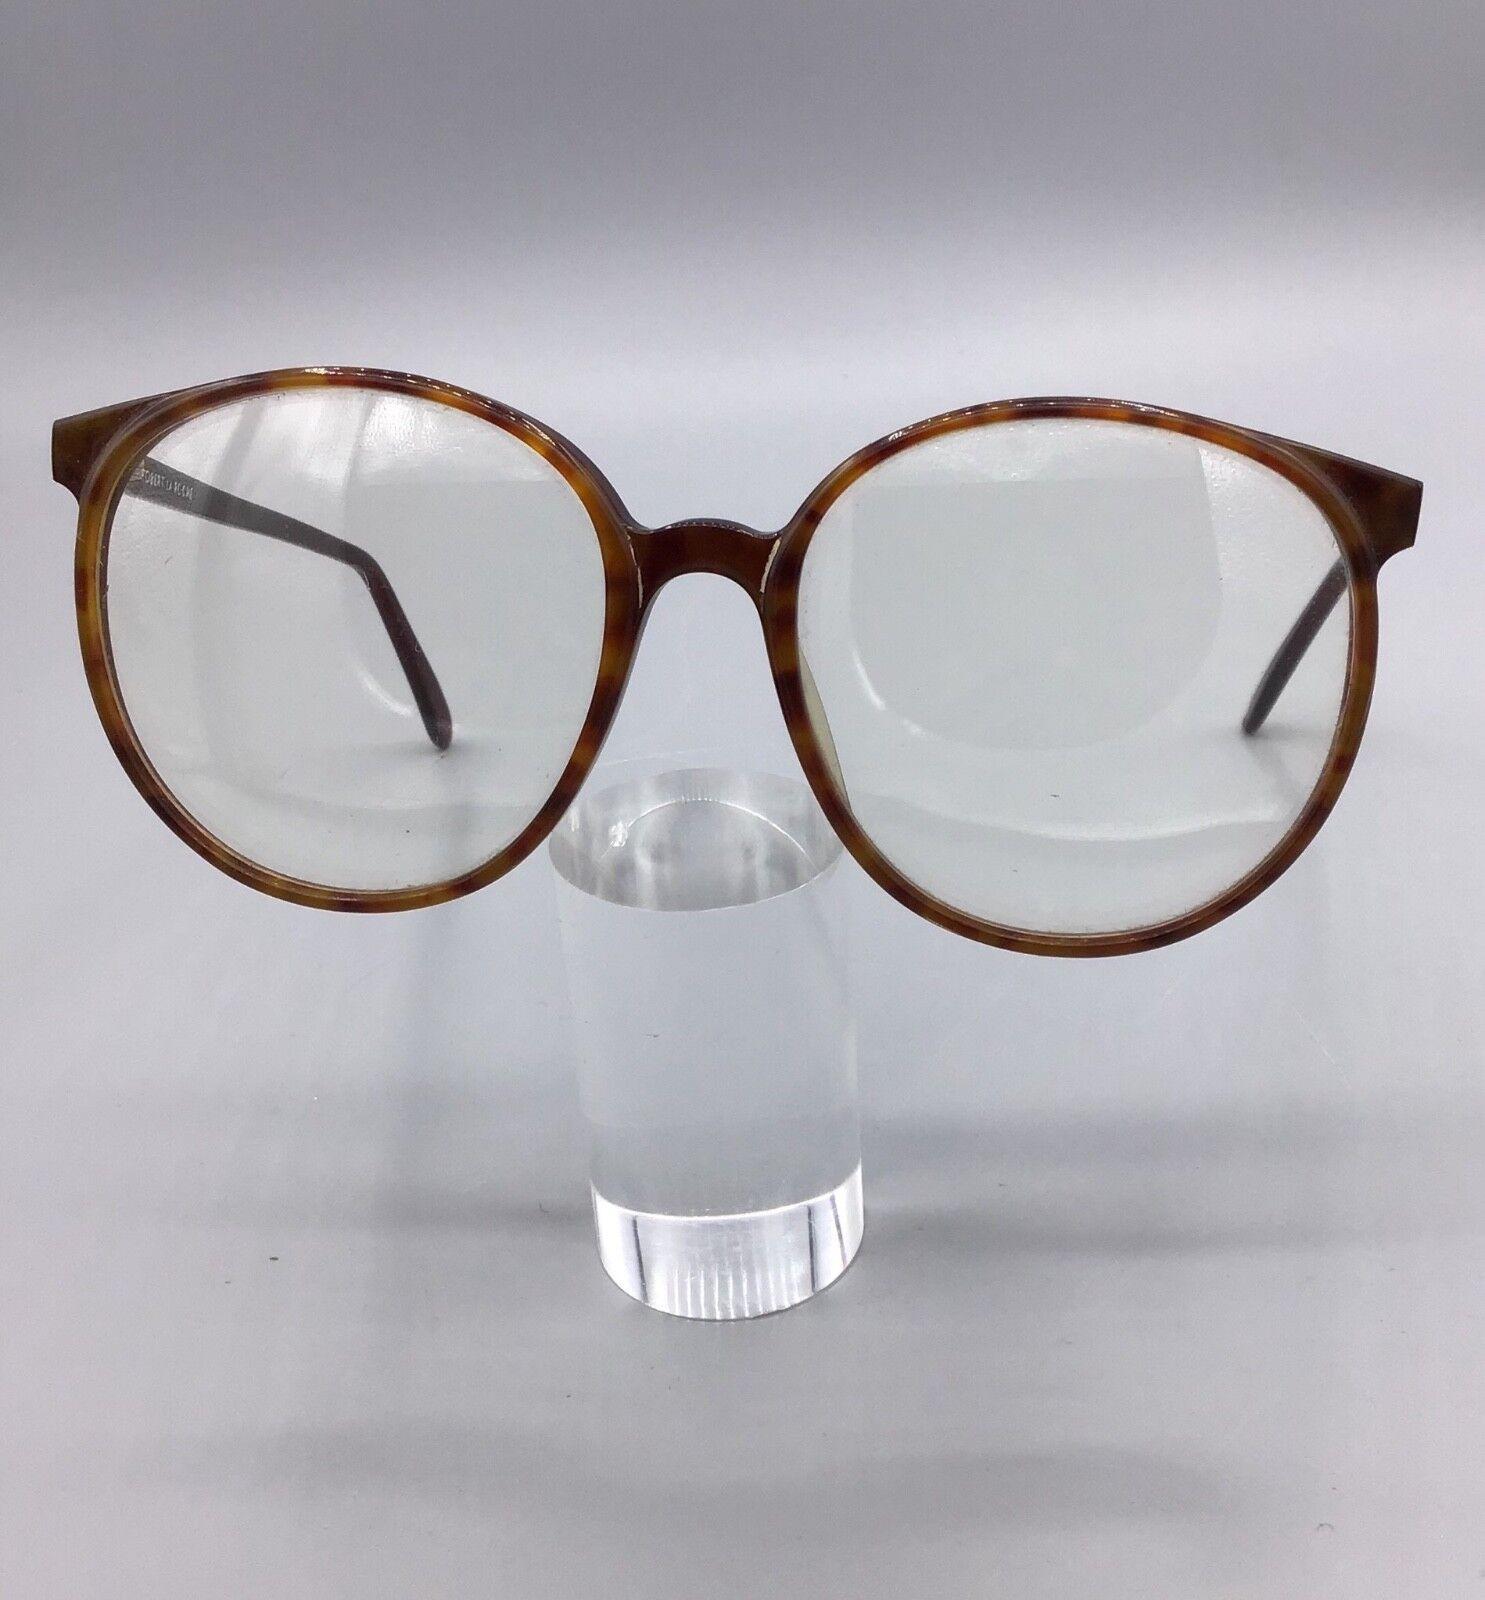 Robert La Roche occhiale vintage eyewear brillen lunettes gafas